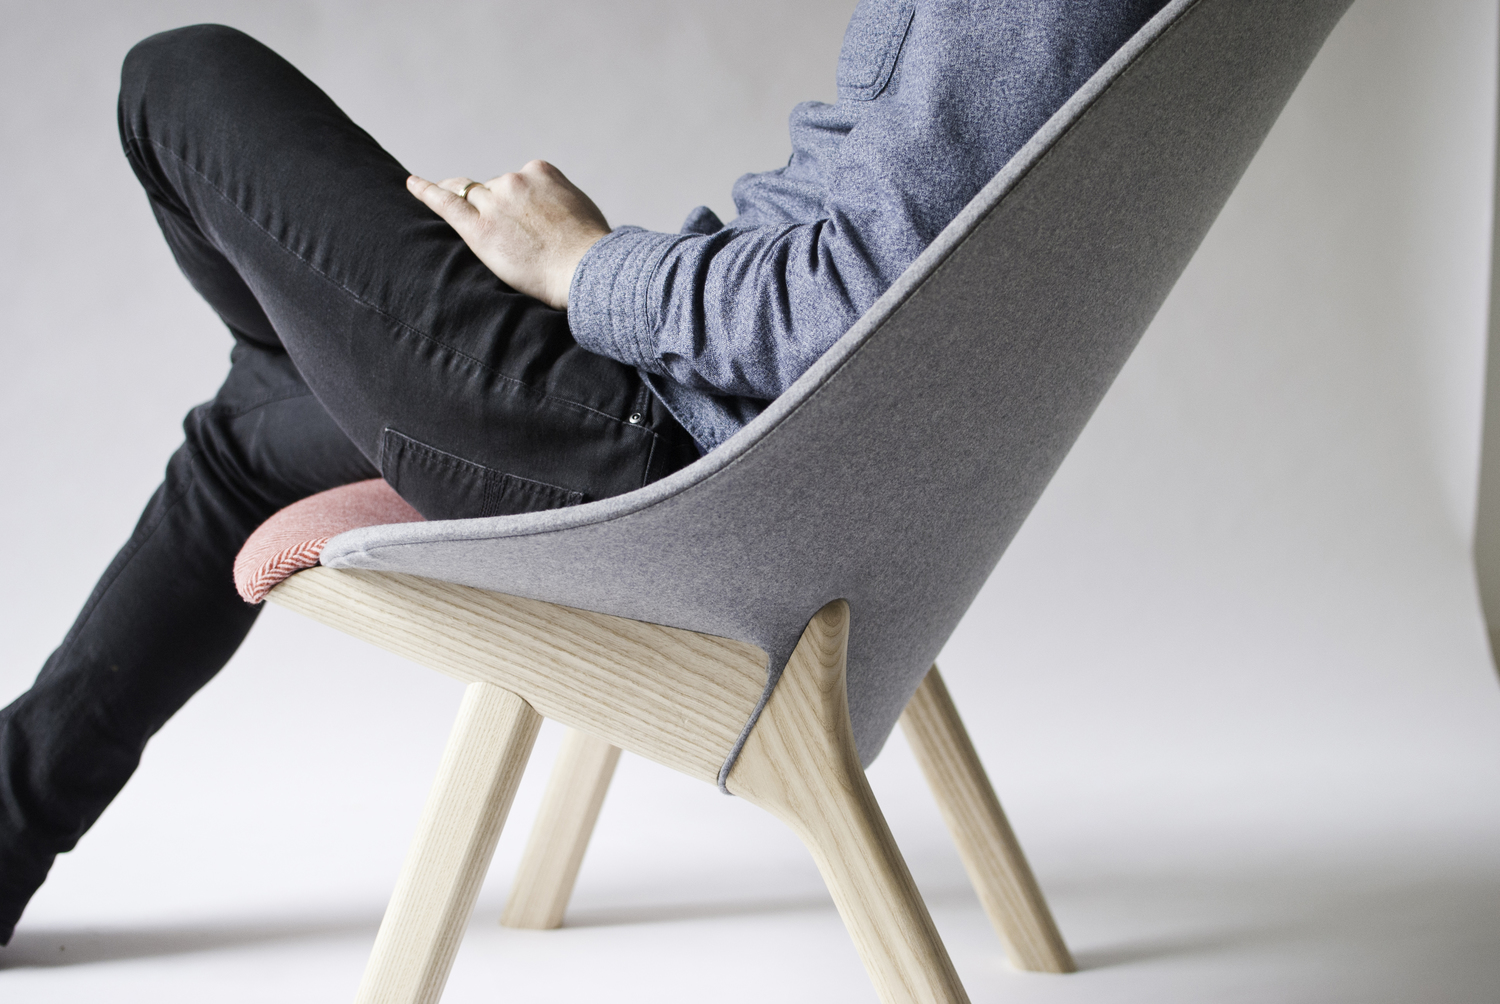 Sprung Lounge Chair by Studio Gorm